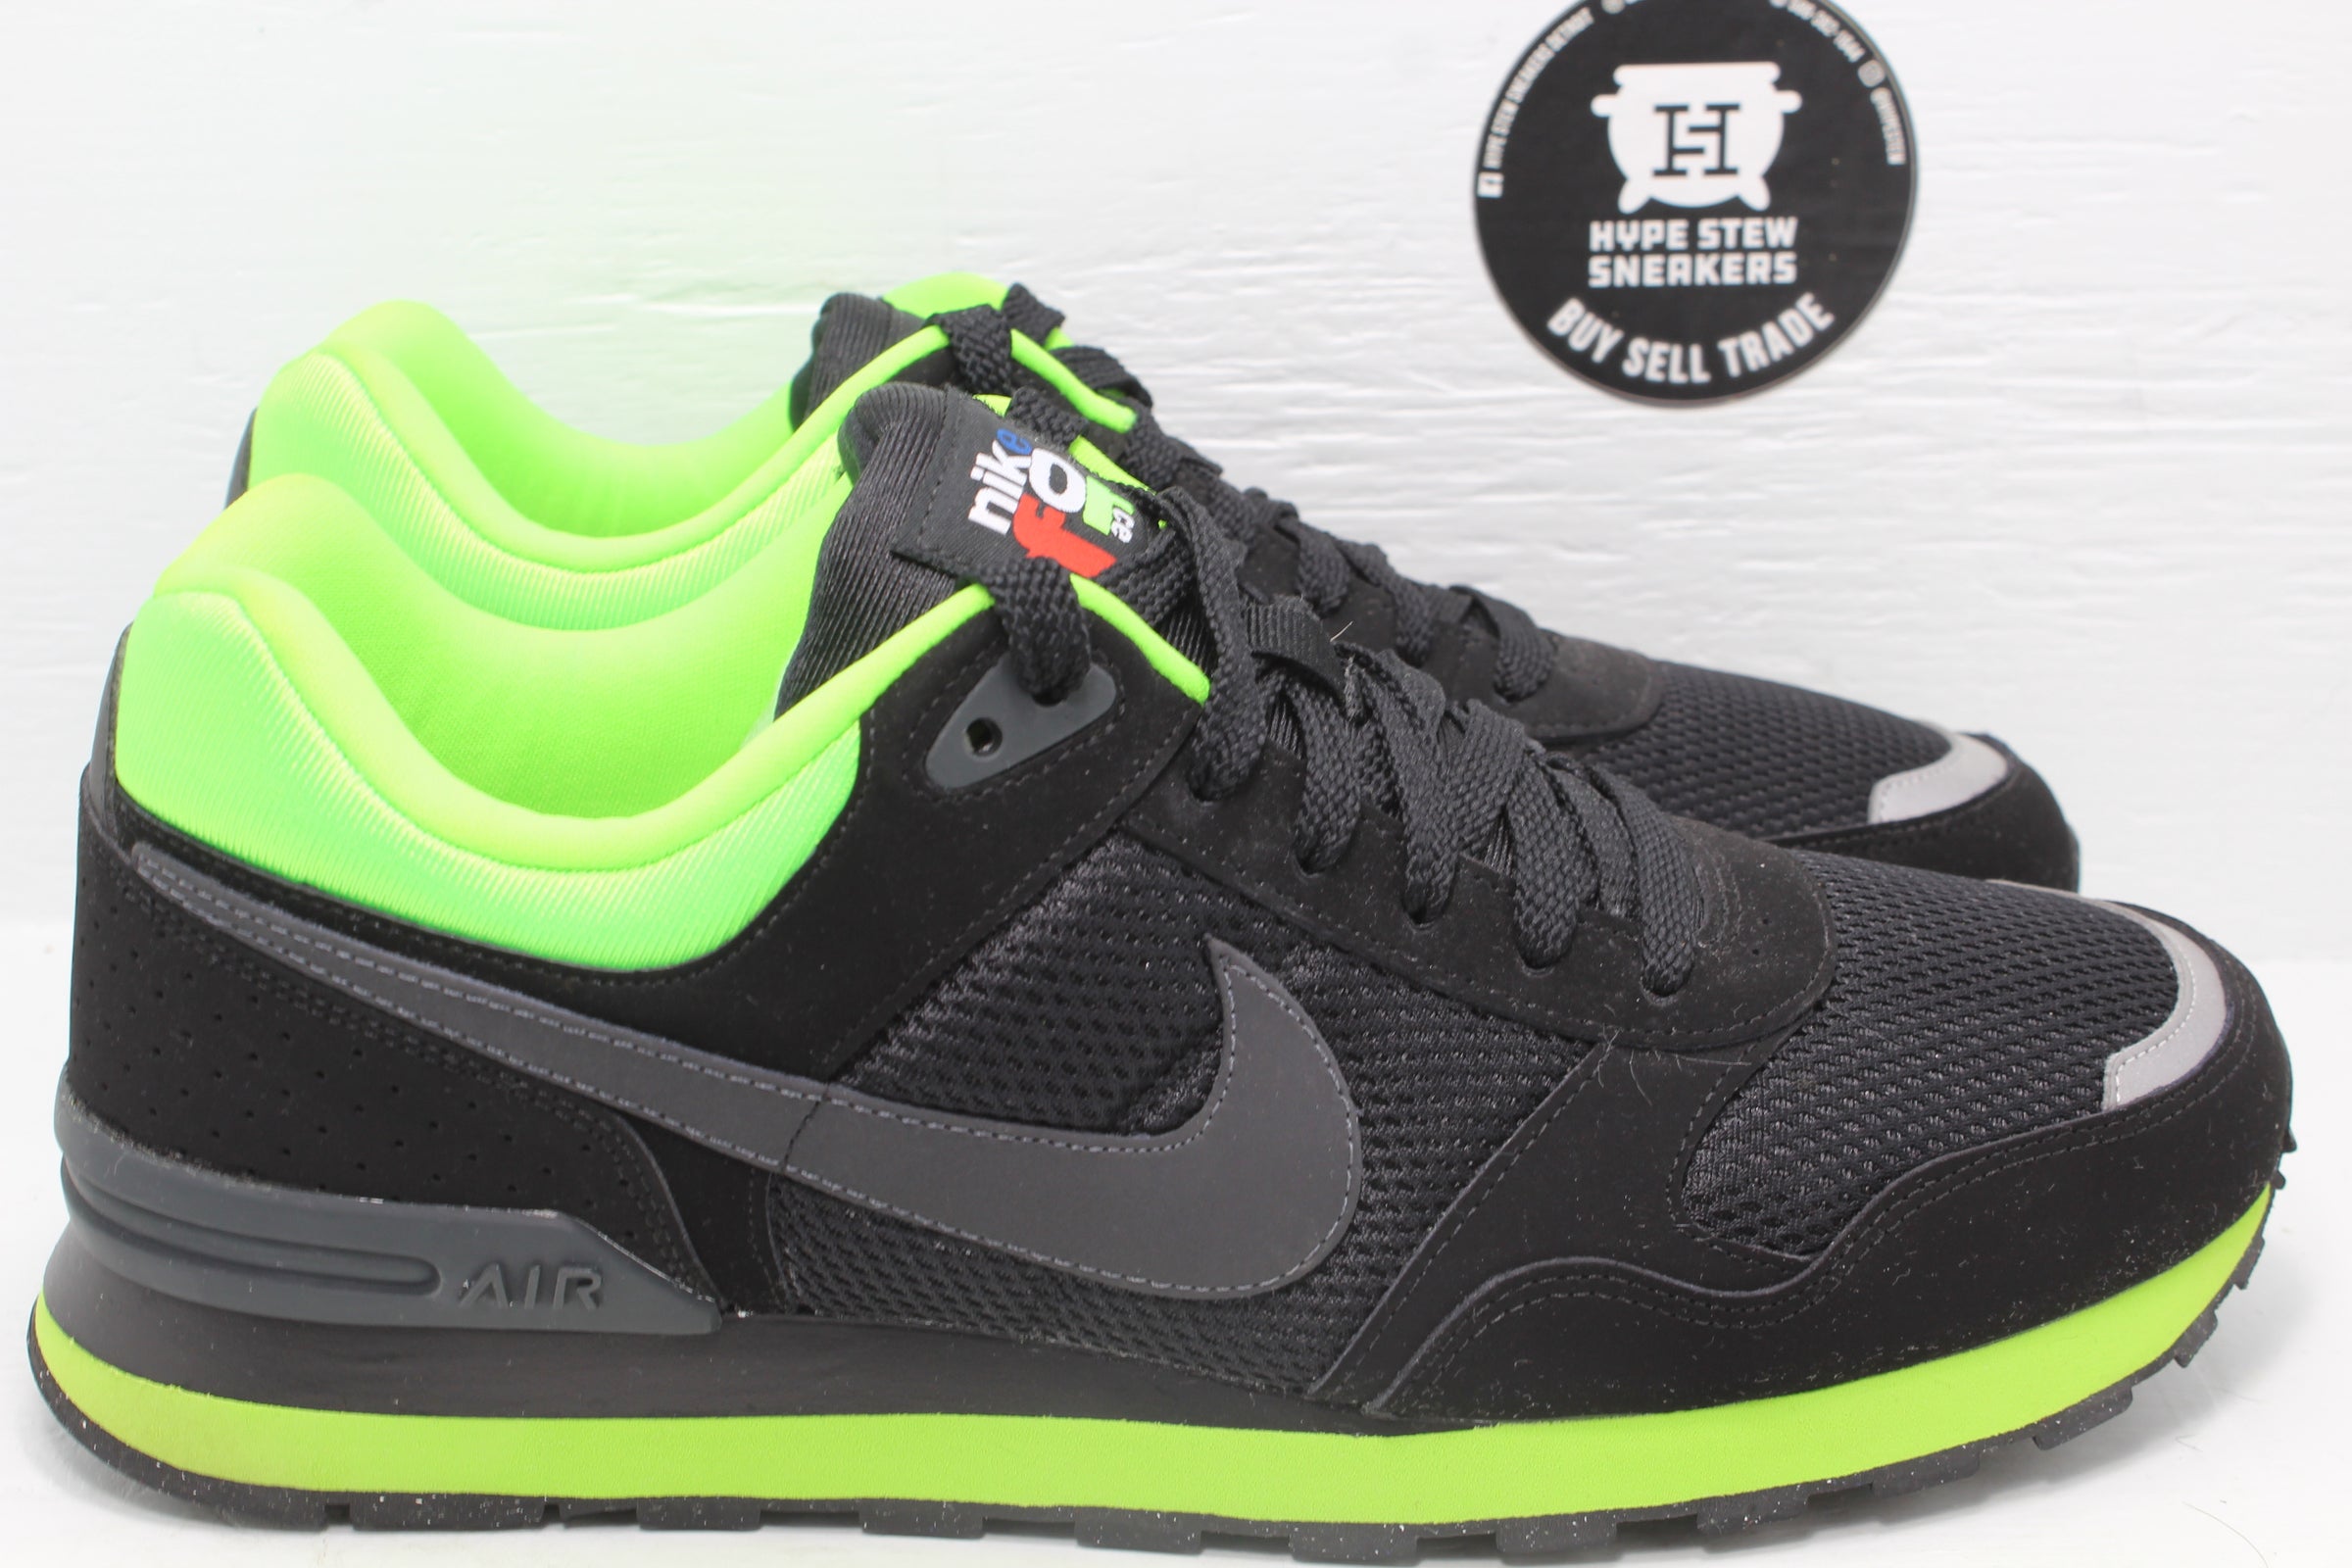 Garganta Fondo verde estudio Nike MS78 LE 'Black Electric Green' | Hype Stew Sneakers Detroit